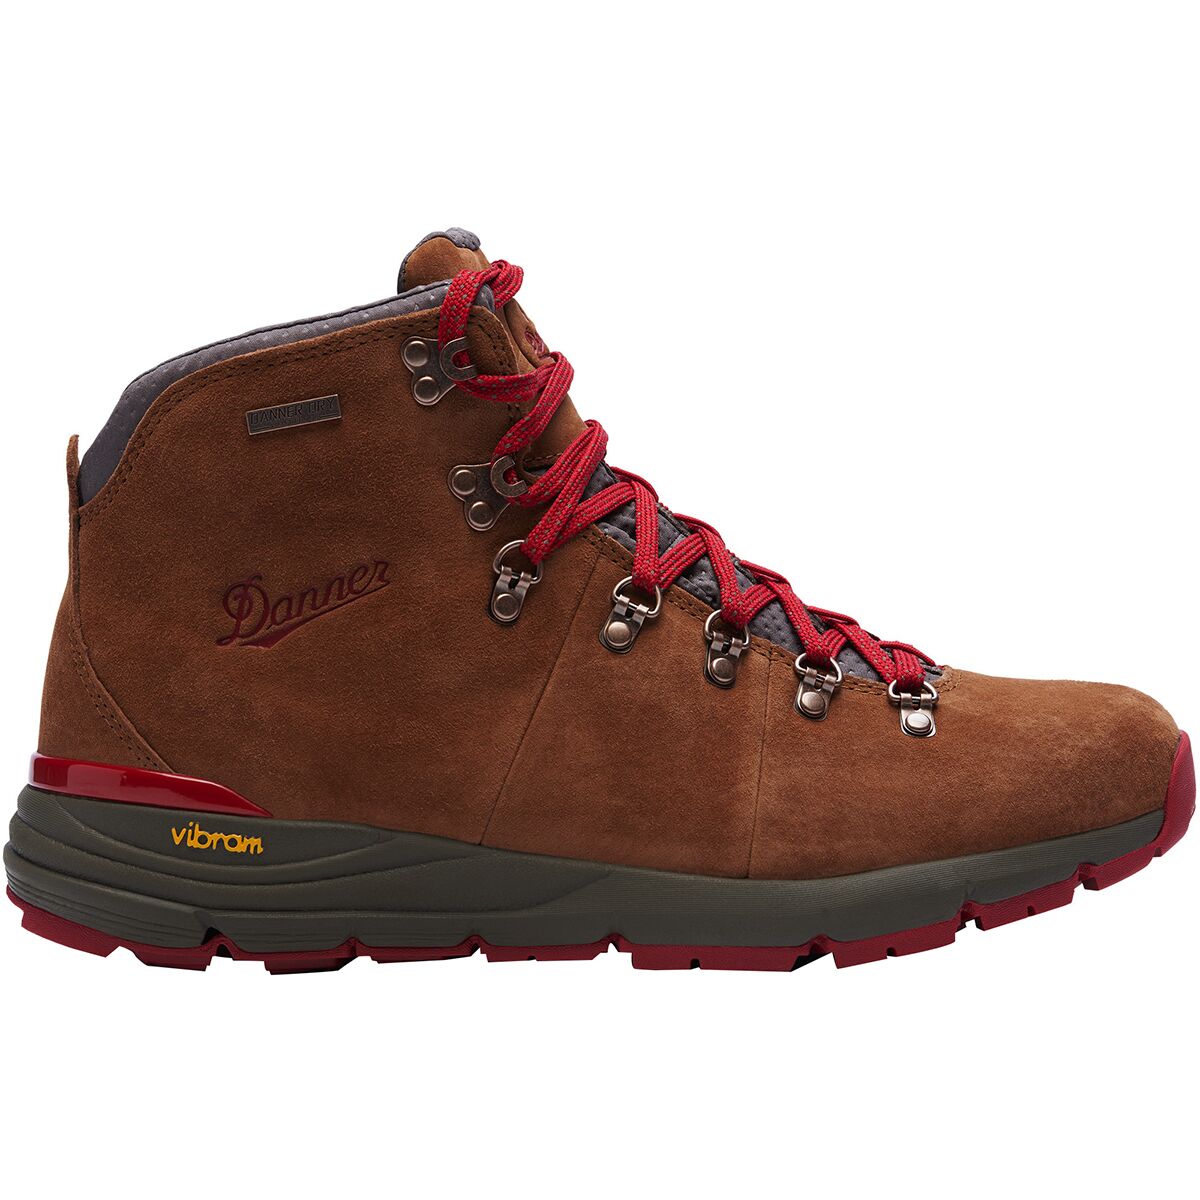 Danner Mountain 600 Hiking Boot - Men's